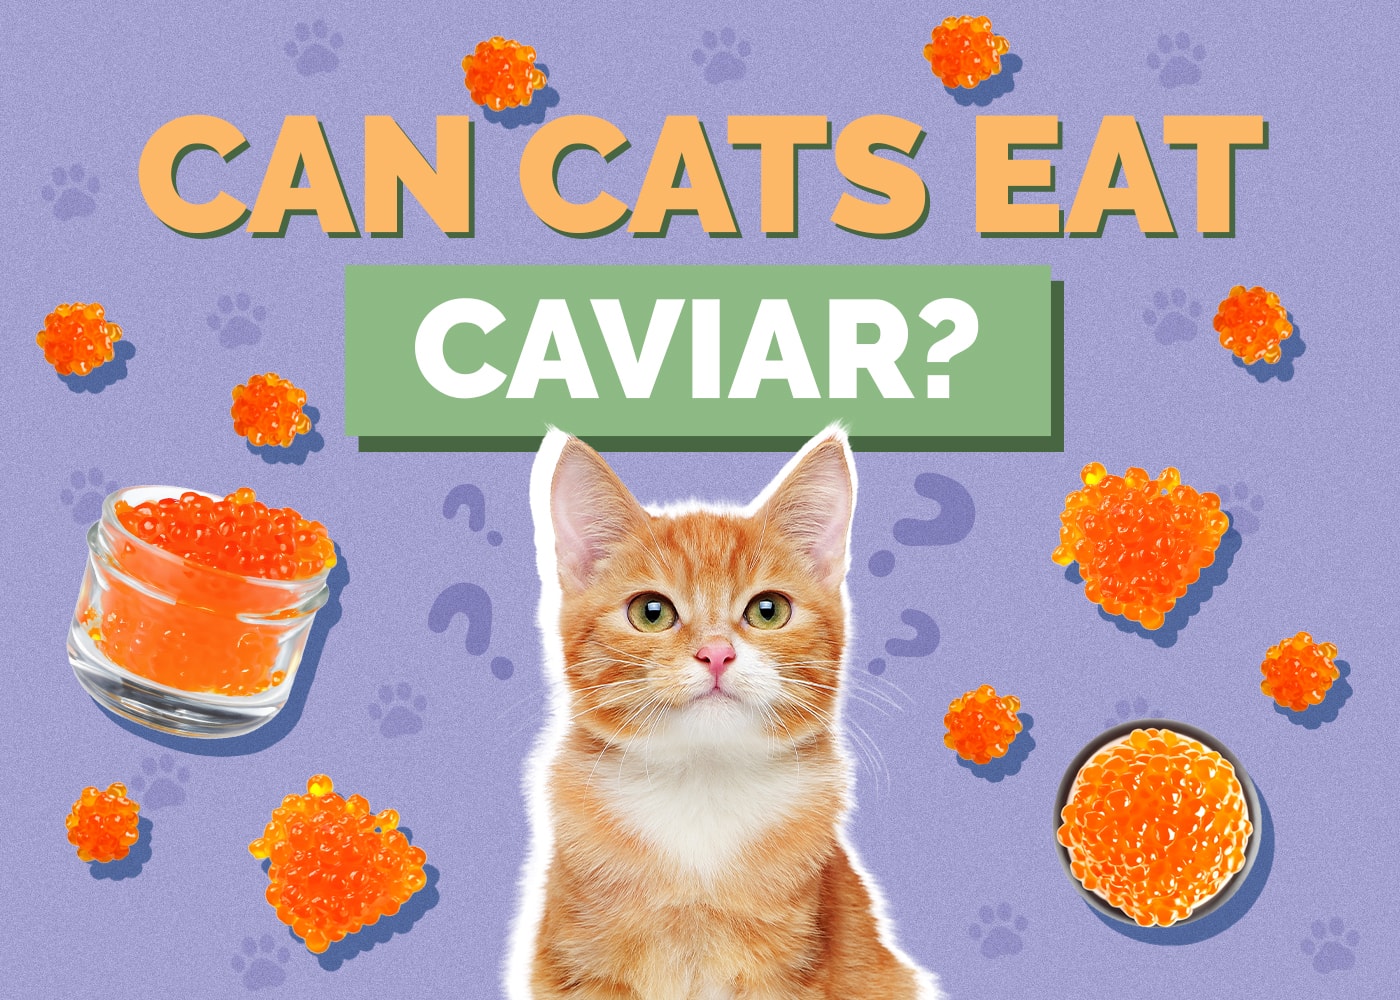 Can Cats Eat caviar